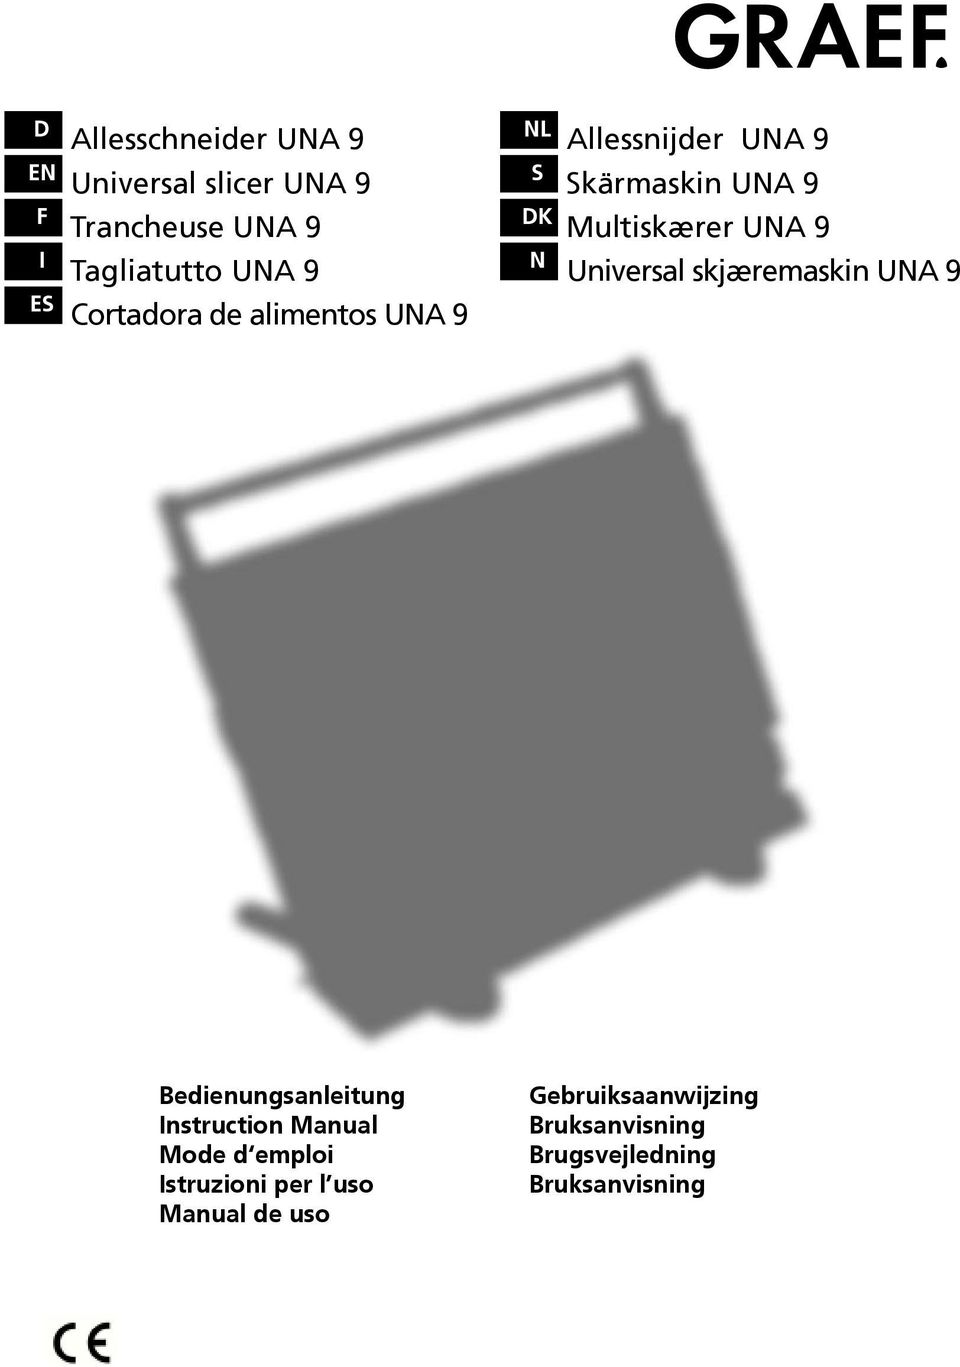 Universal skjæremaskin UNA 9 Bedienungsanleitung Instruction Manual Mode d emploi